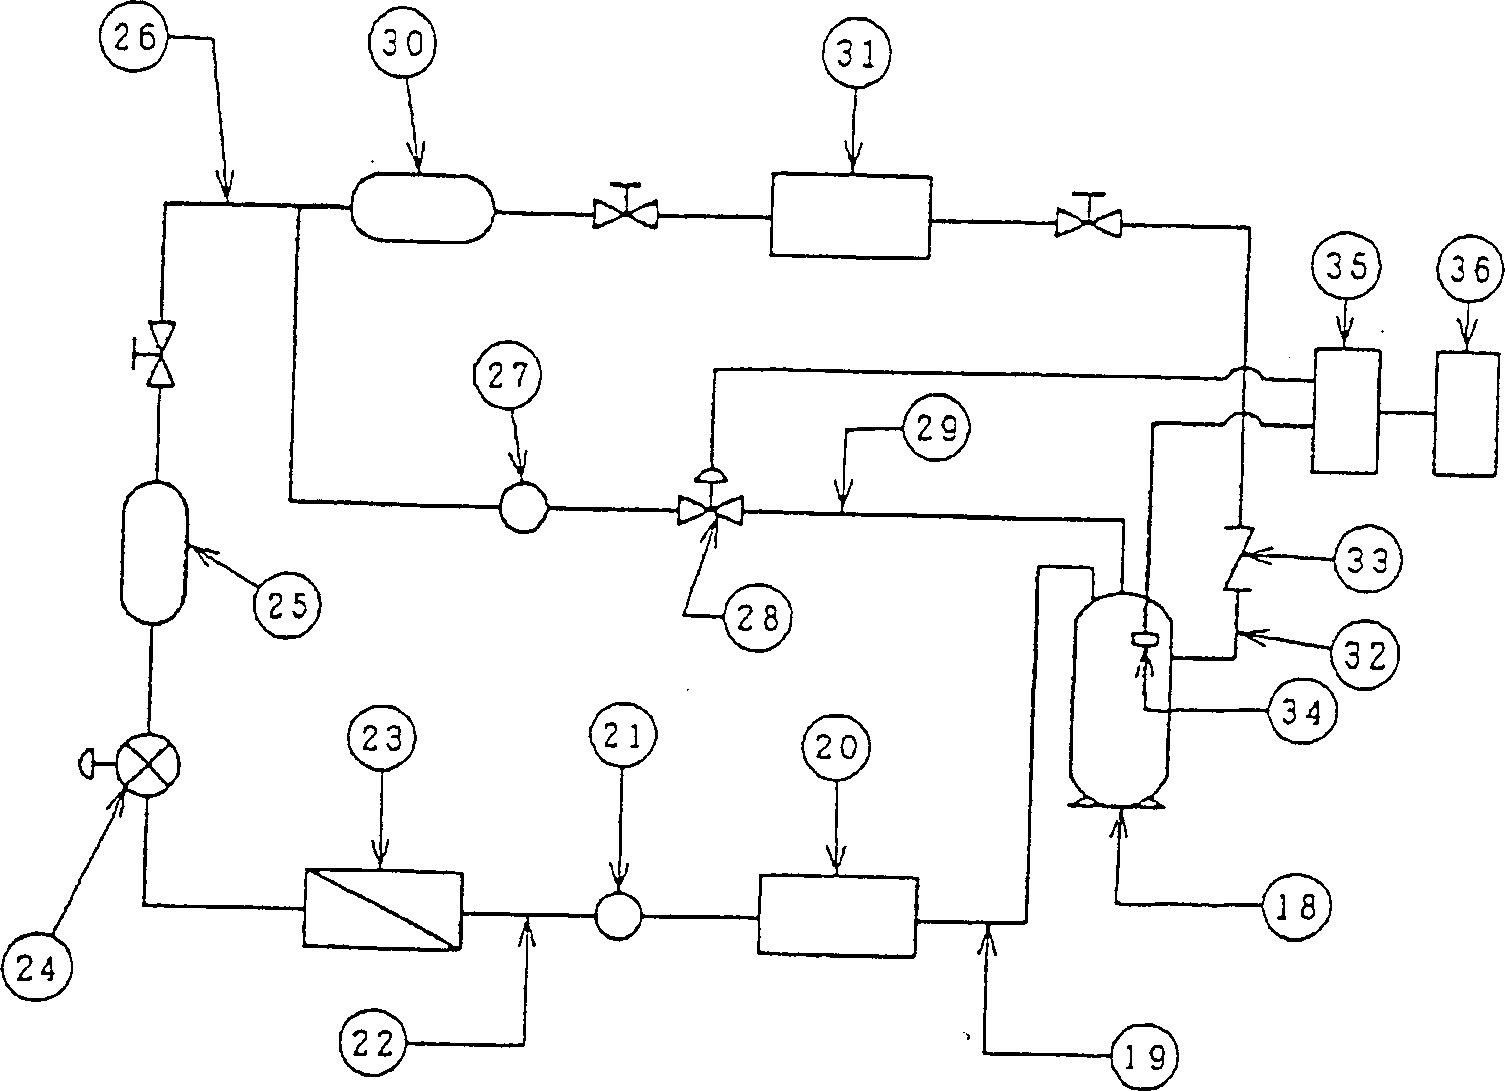 Vortex compressor and refrigerator using ammonia-like as refrigrant